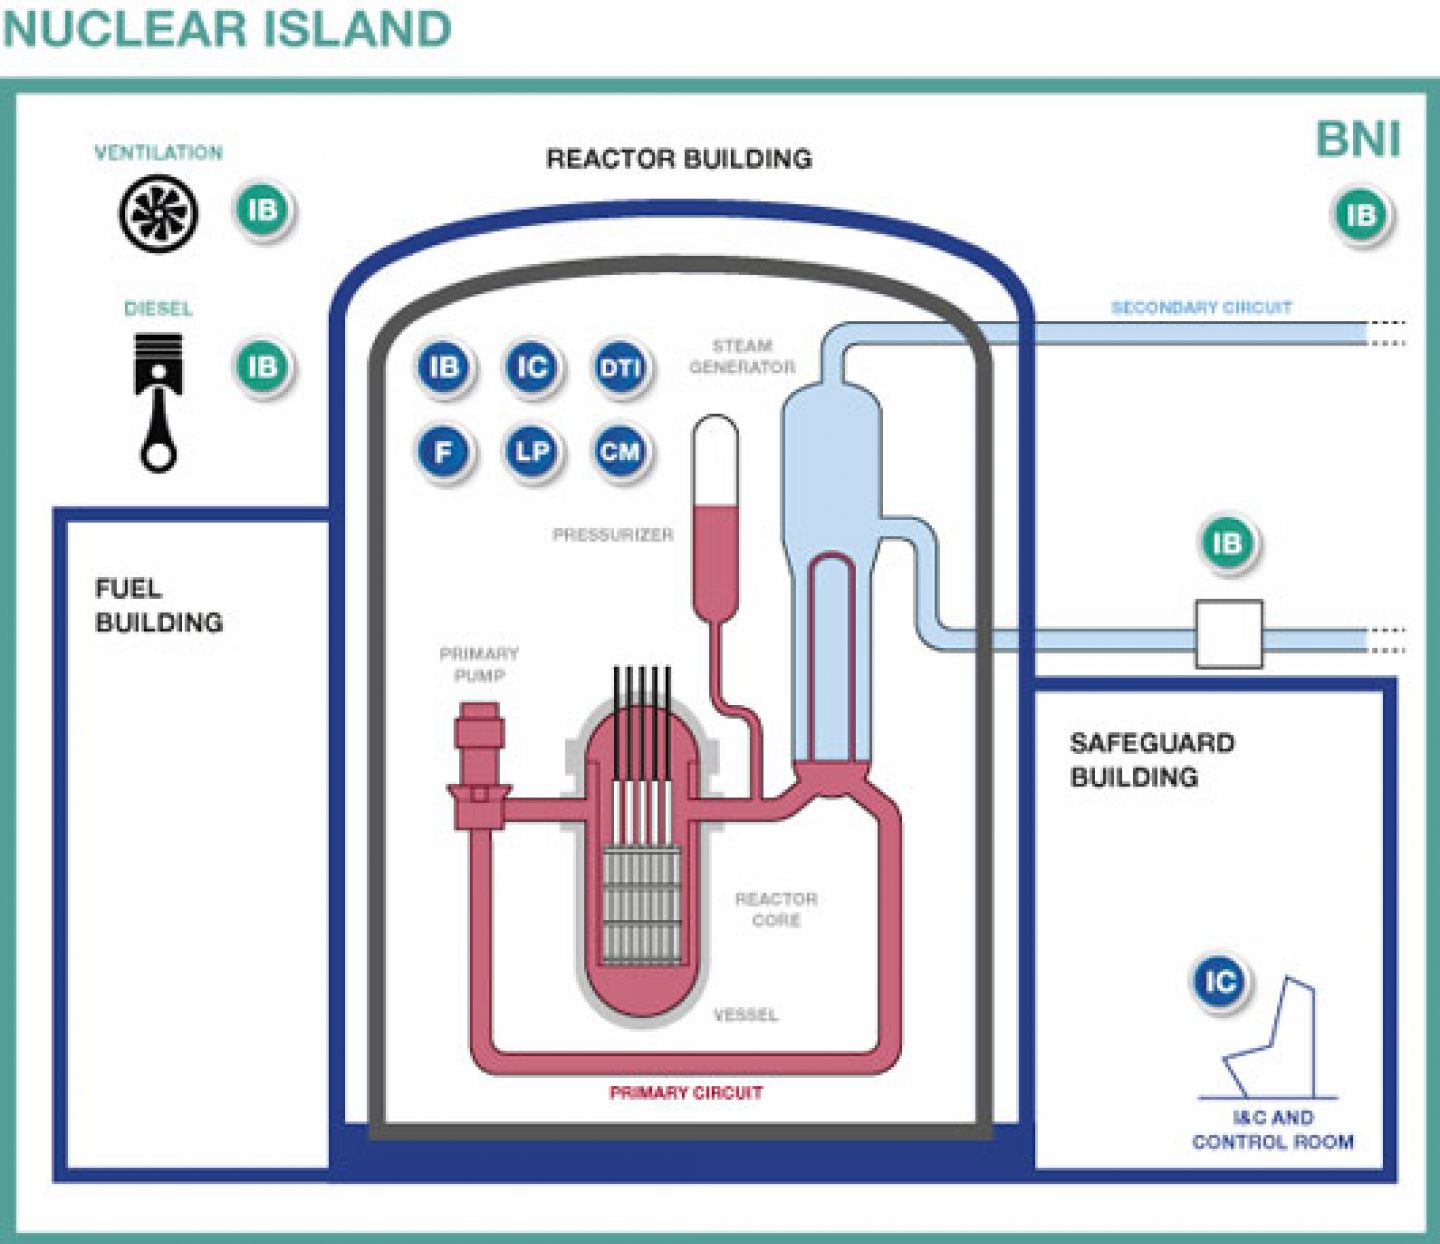 Nuclear Island schema